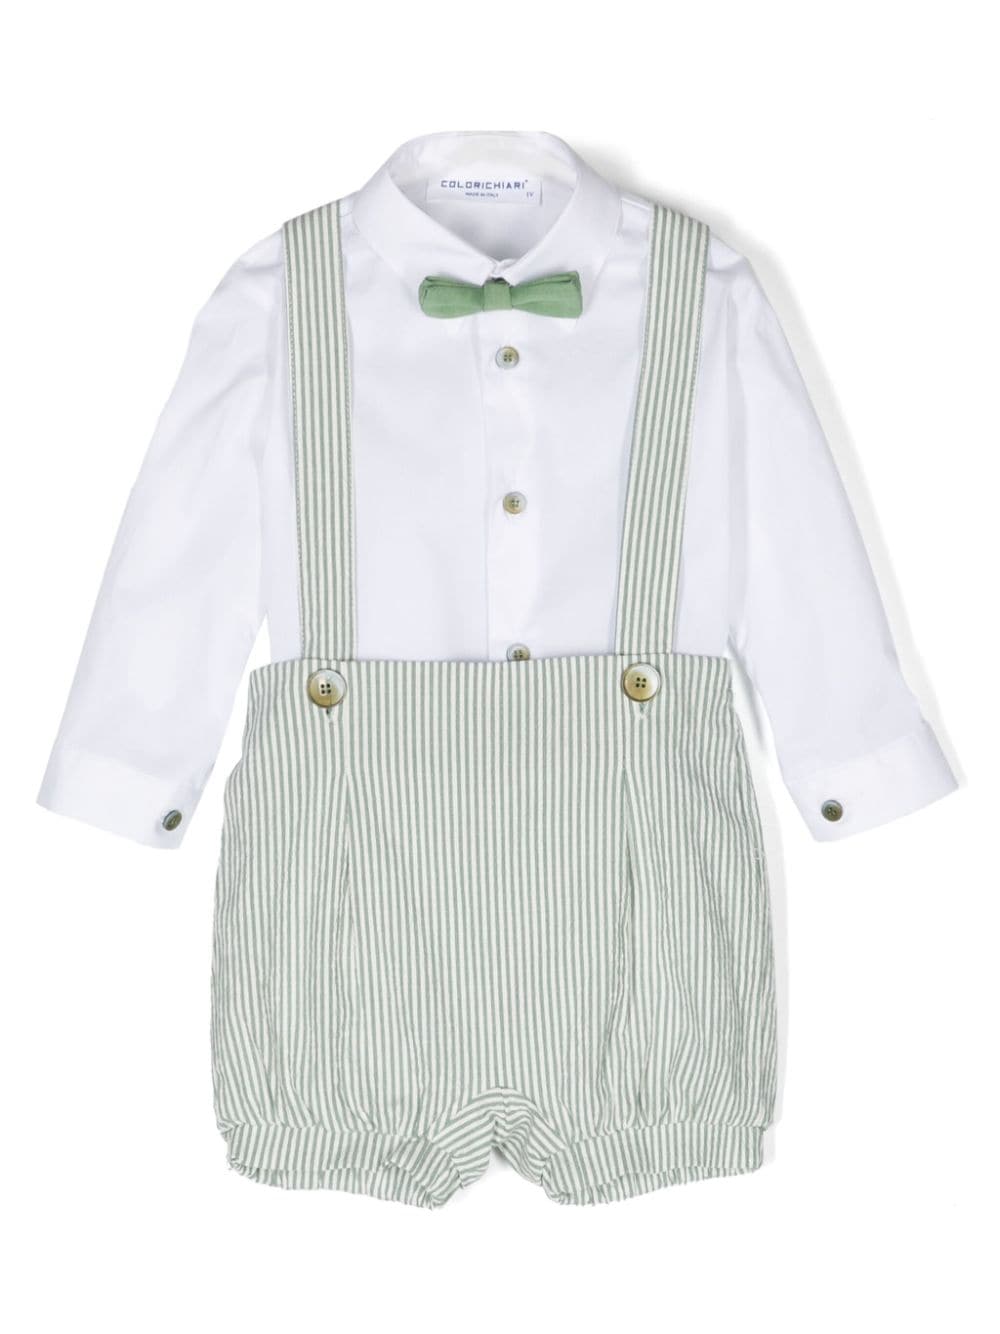 Colorichiari Babies' Striped Cotton Shorts Set In White